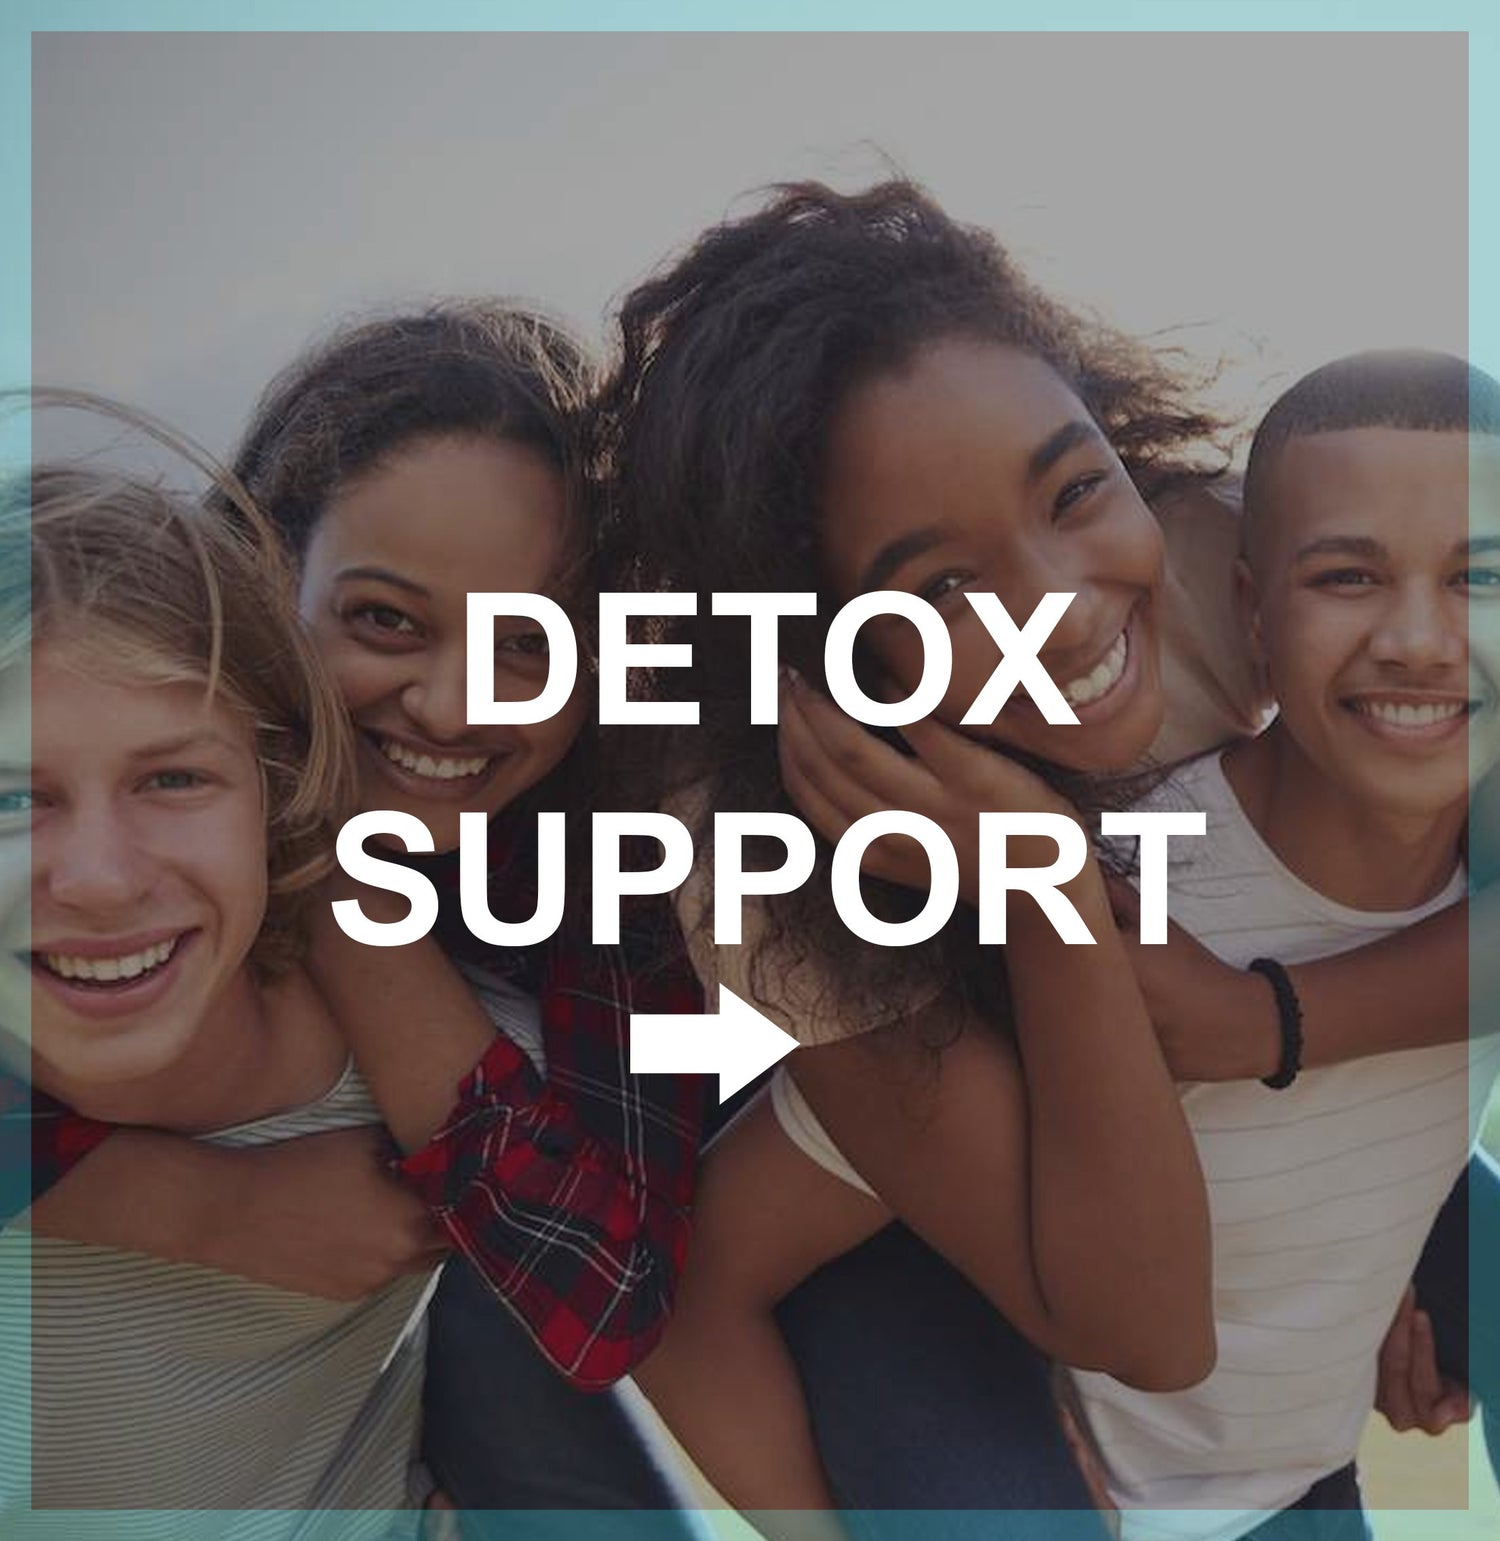 Detox Support